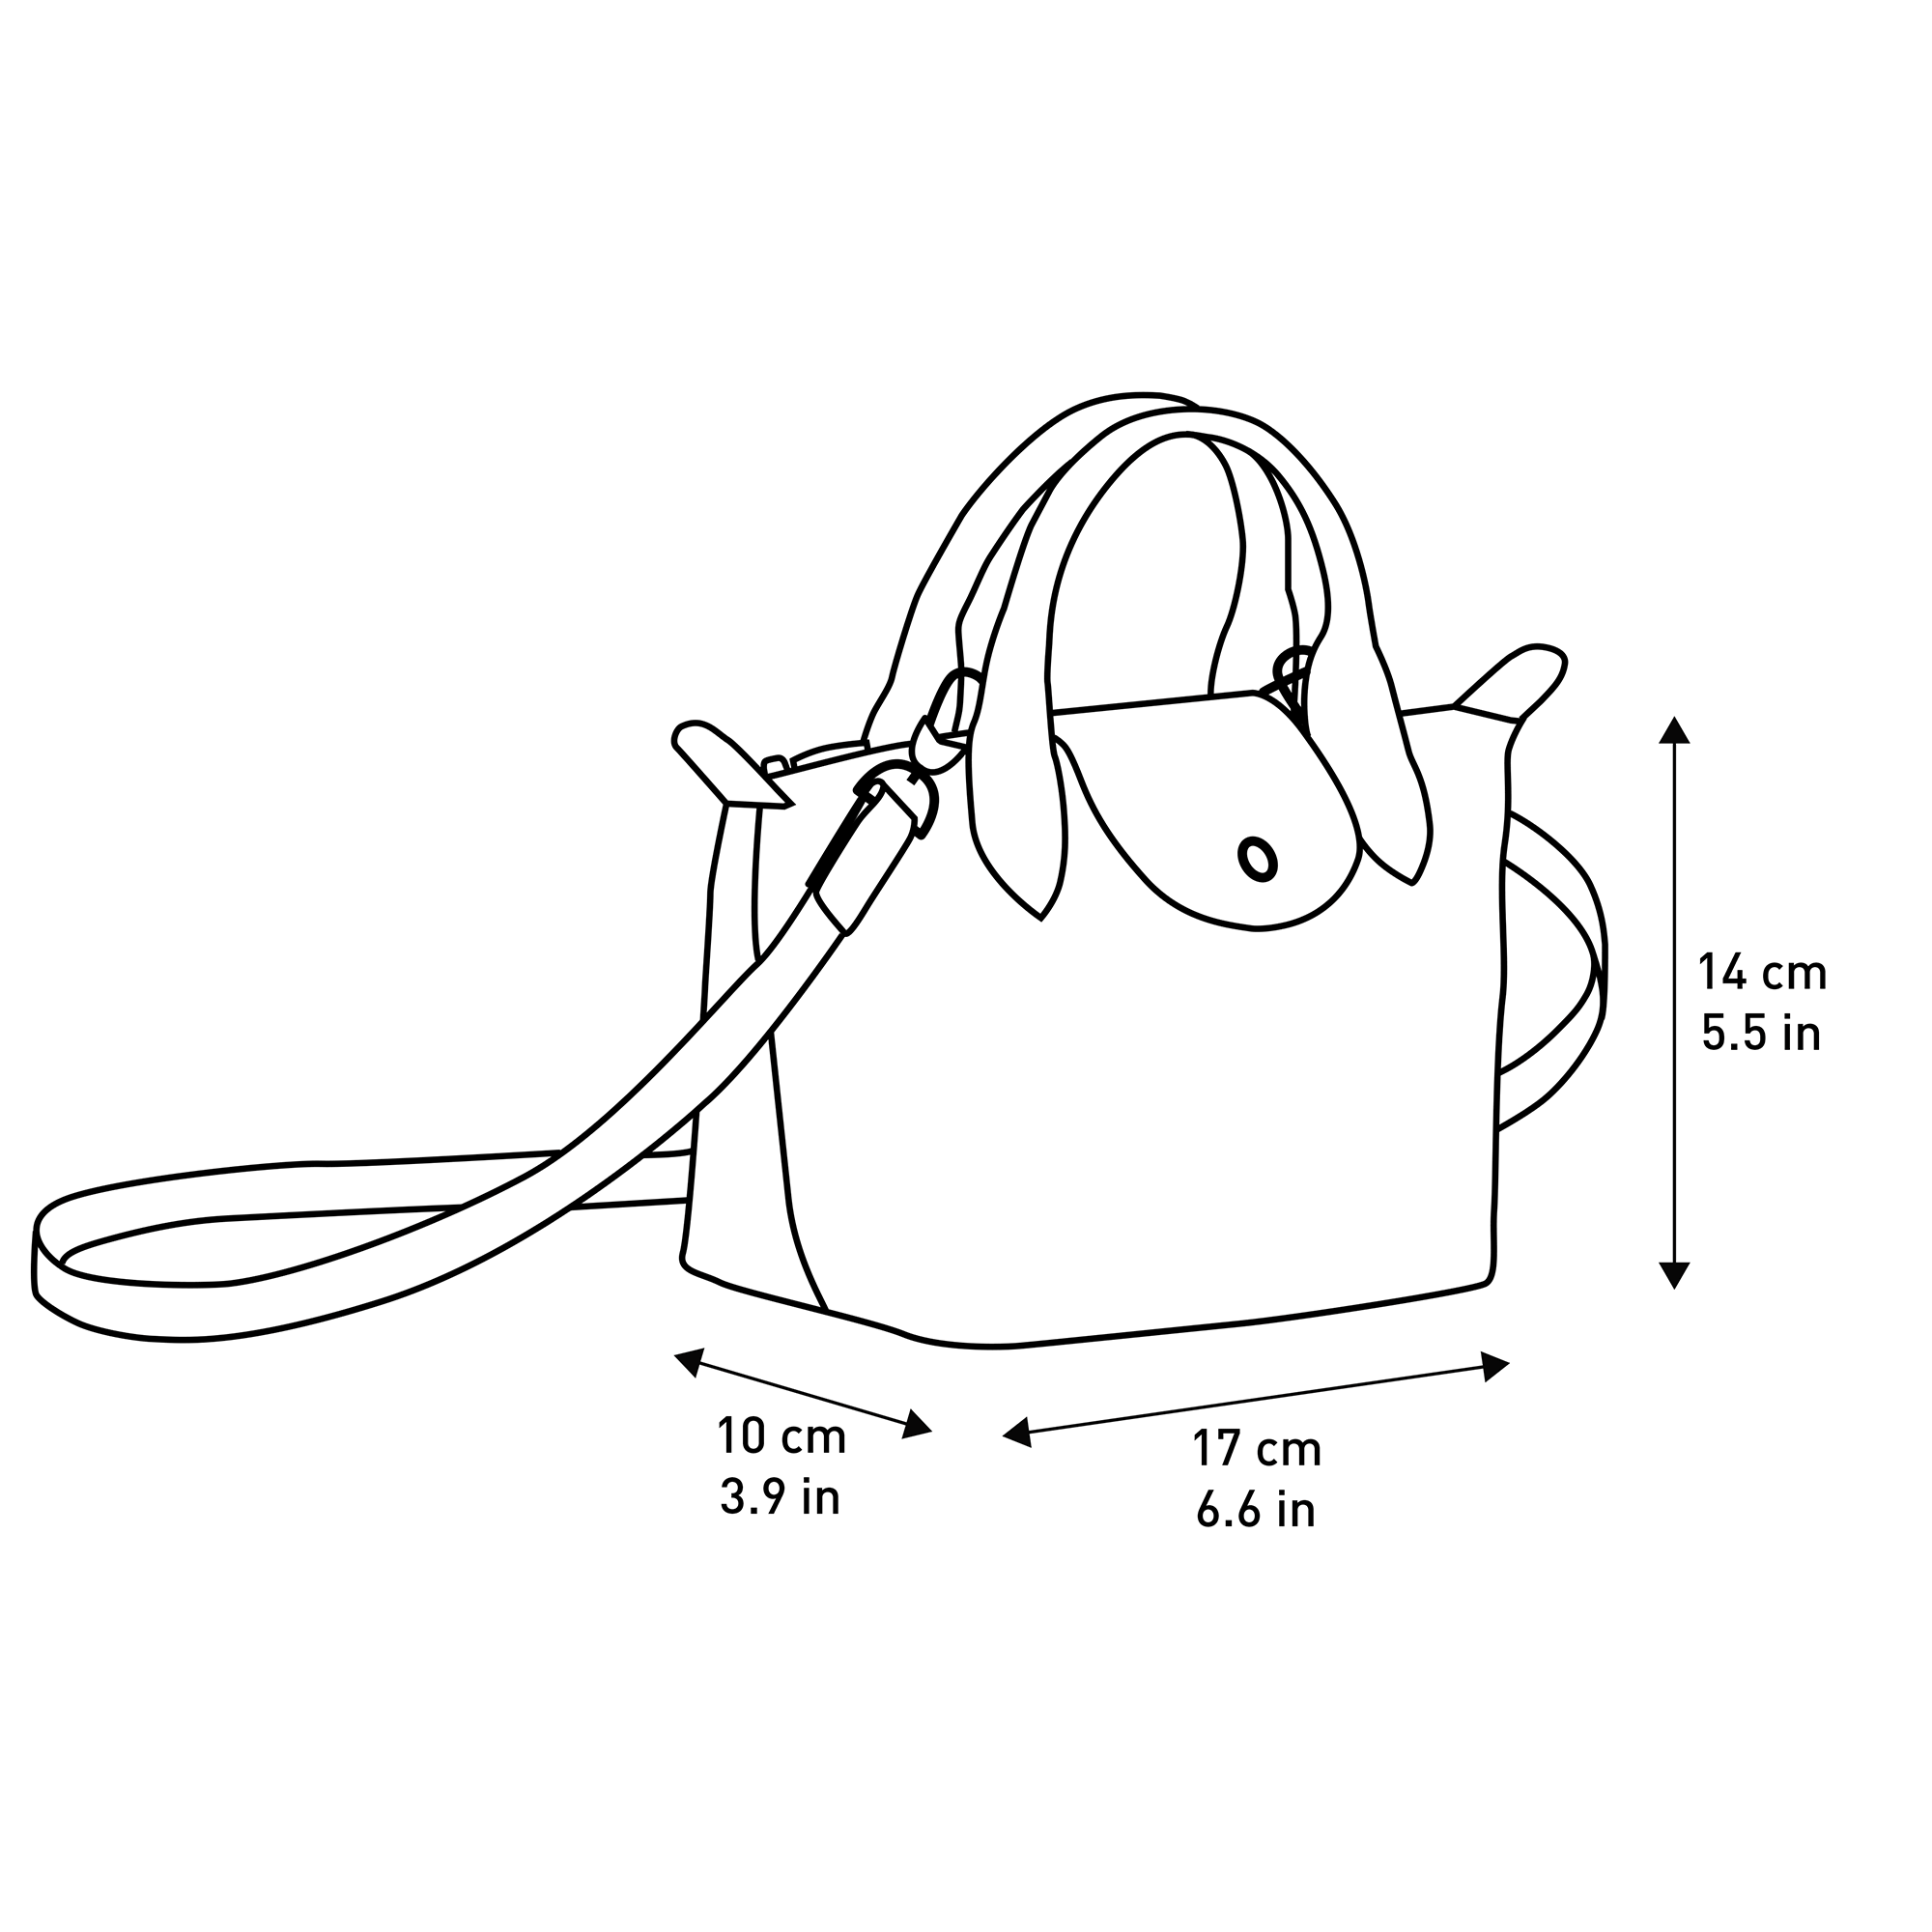 longchamp top handle leather satchel